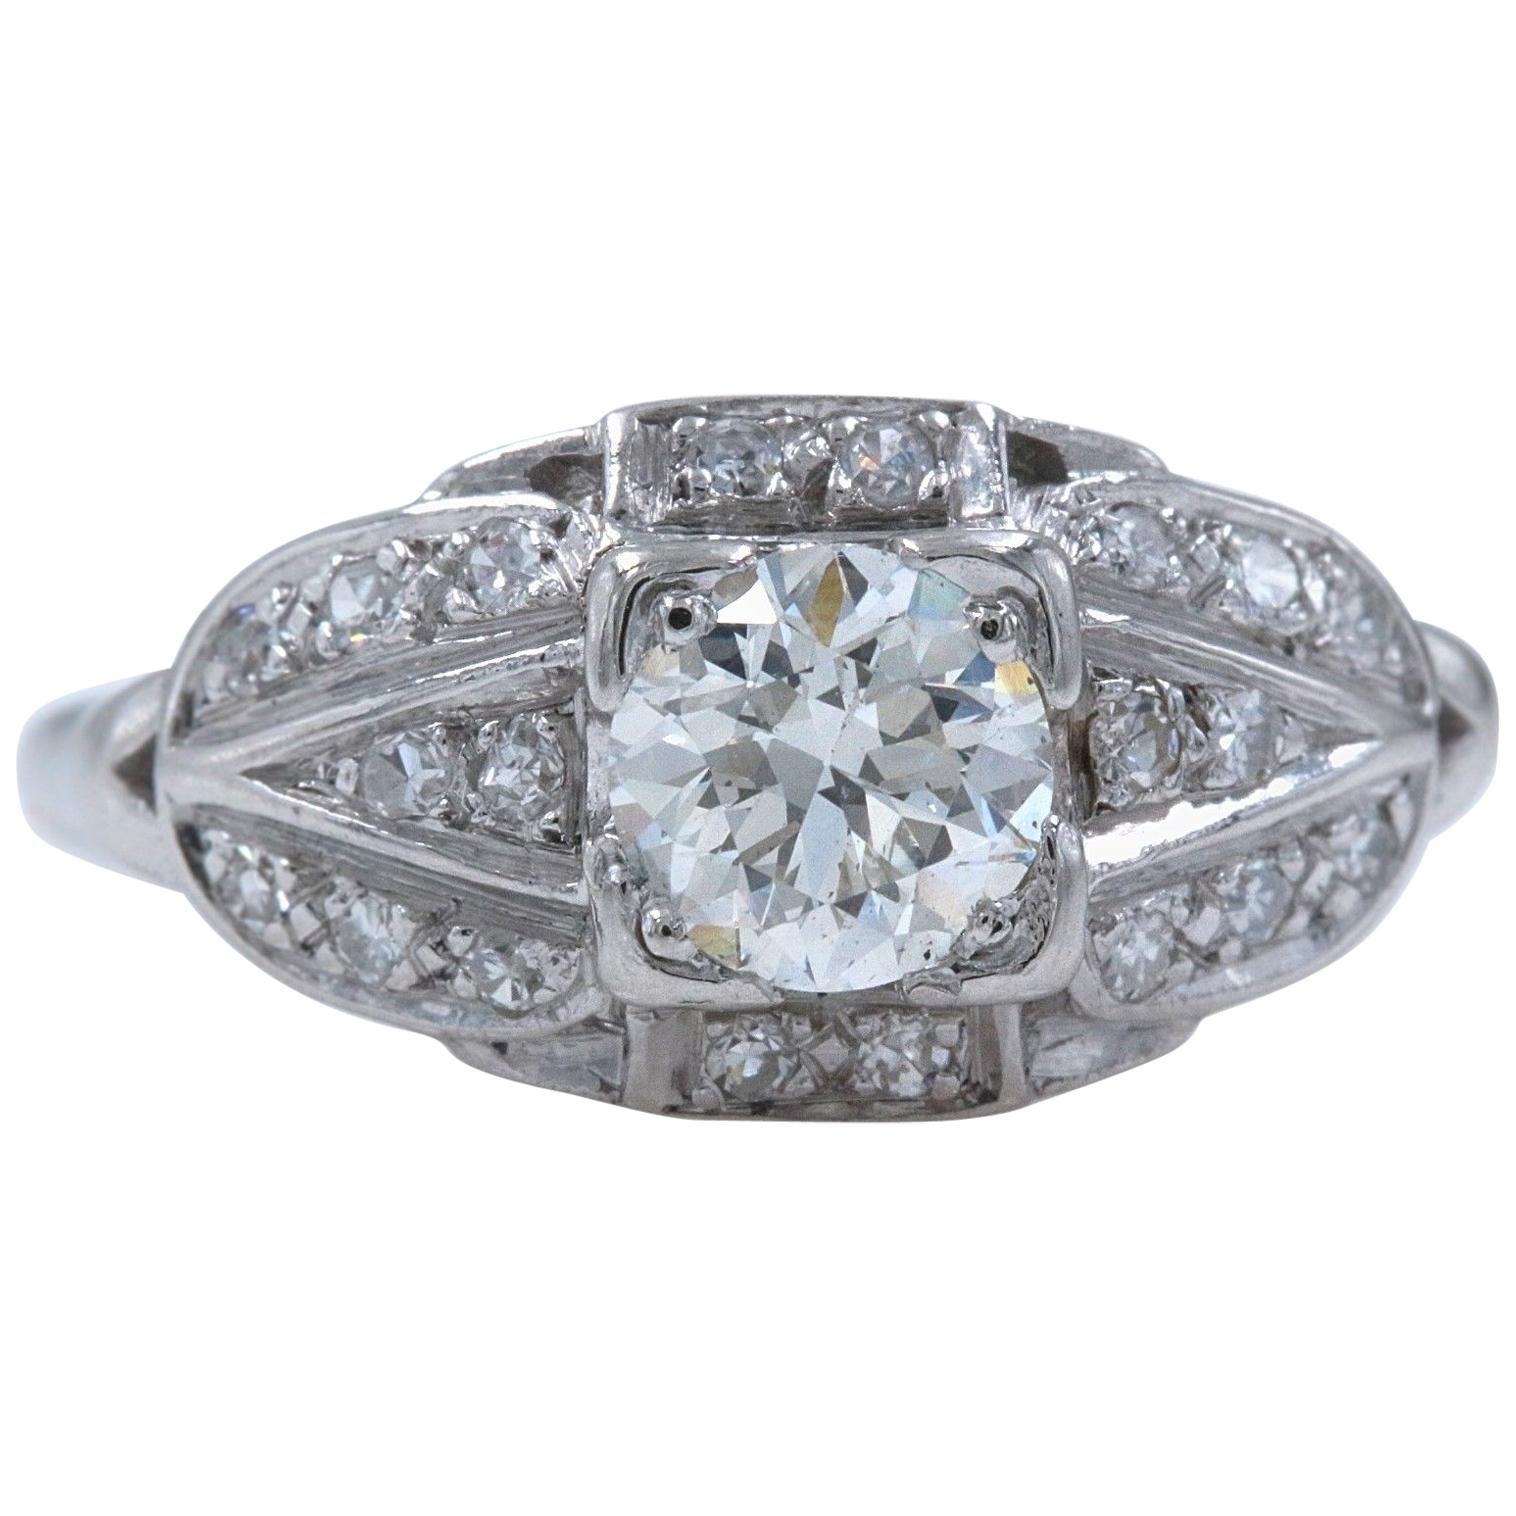 Vintage Platinum Diamond Engagement Ring Old Cuts 1.08 Carat For Sale